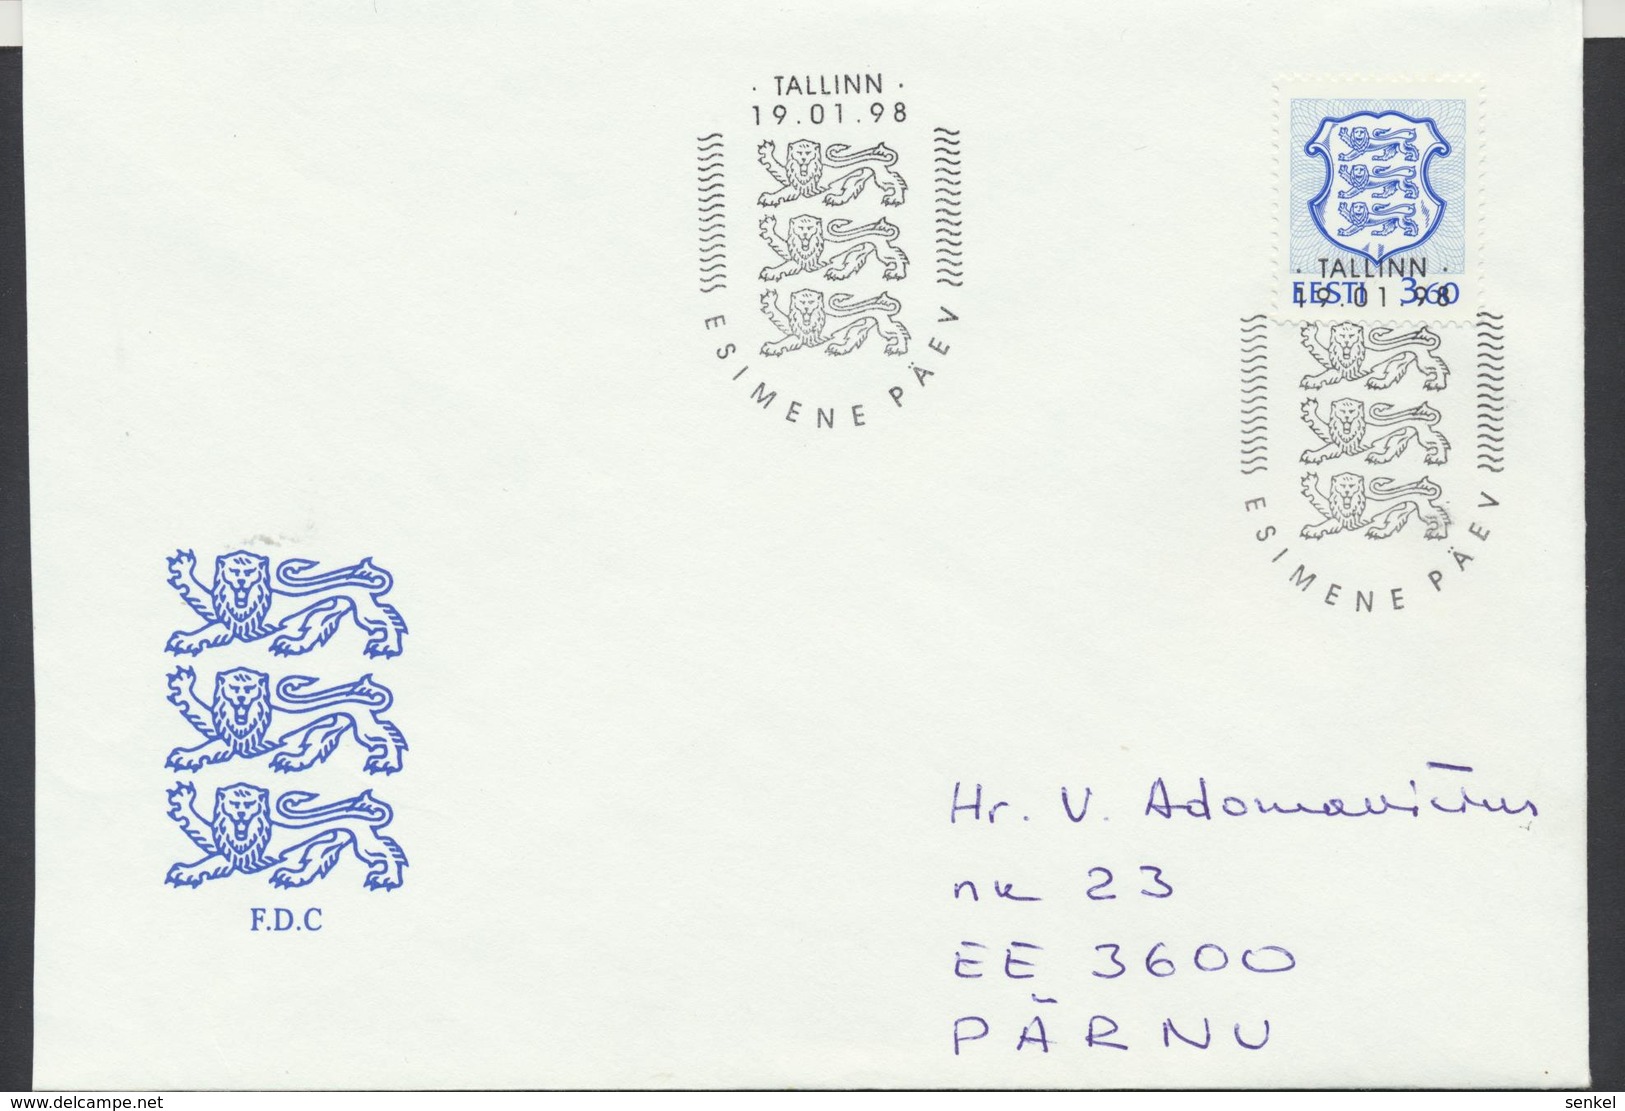 58-11 Estonia Tallinn FDC 19.01.1998 From Post Arrival Postmark - Estonie